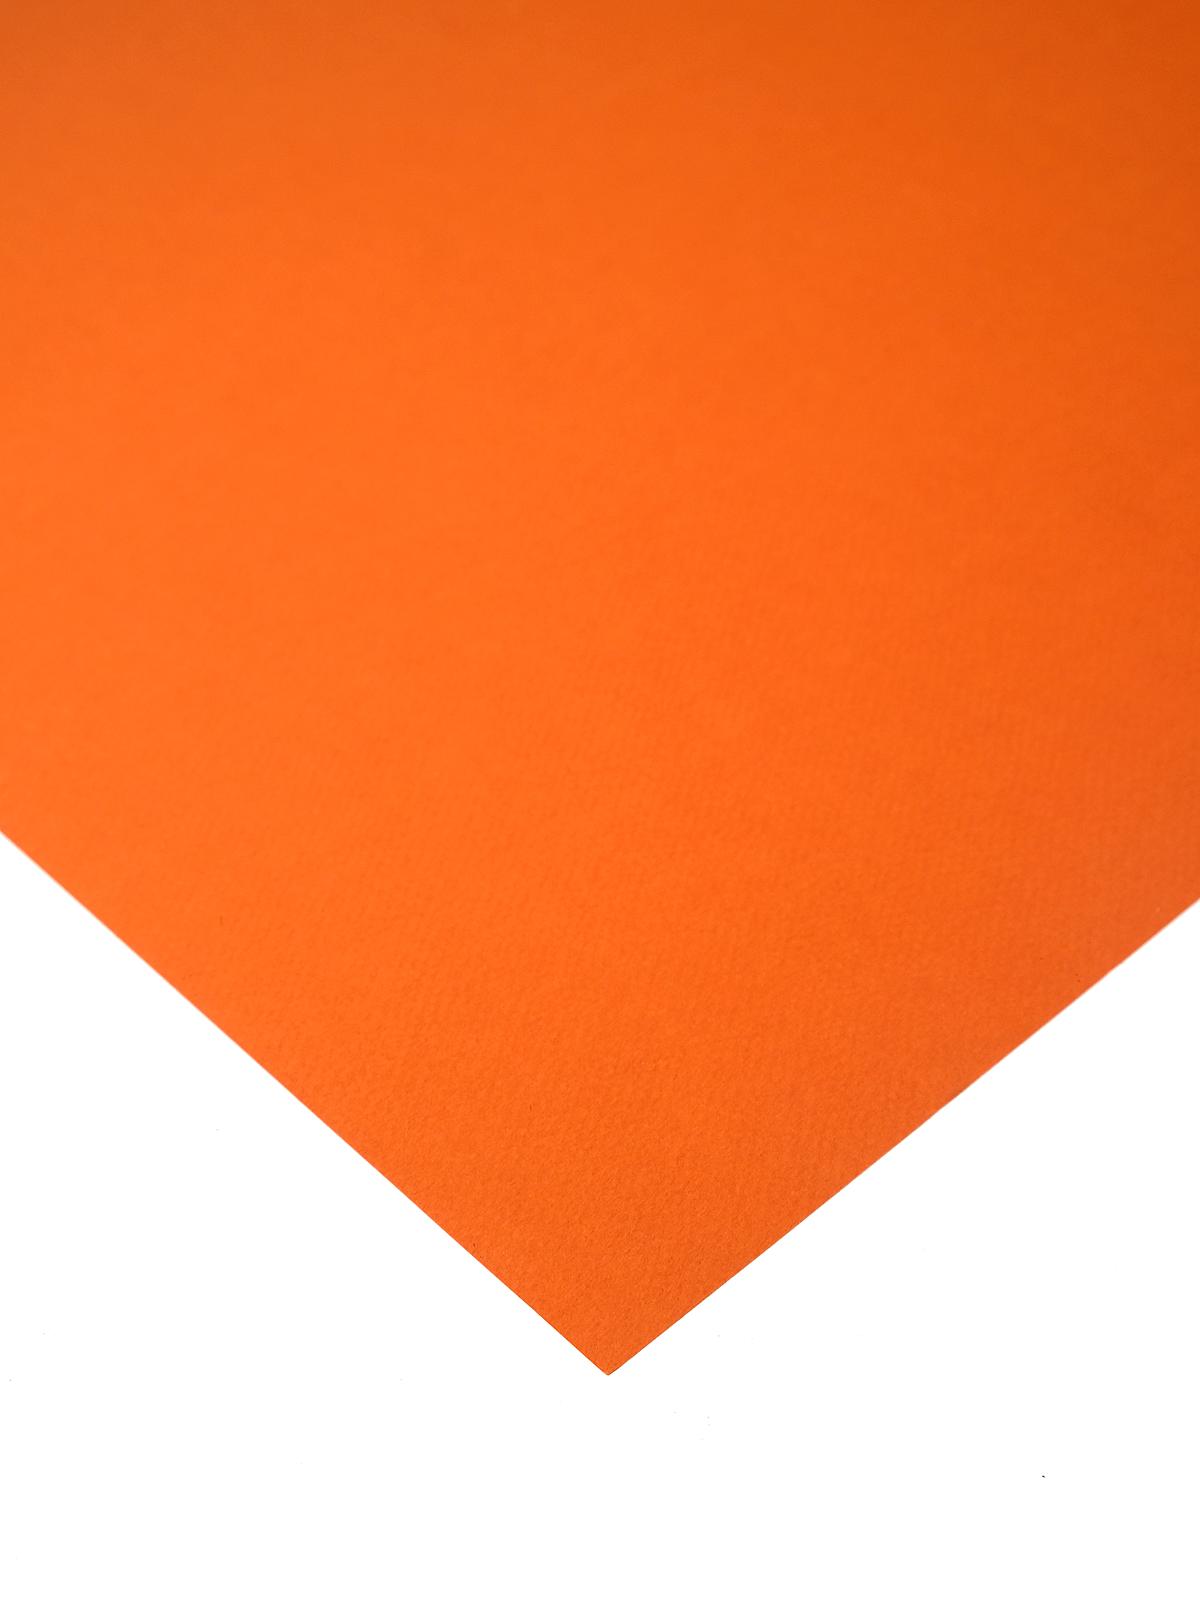 Mi-teintes Tinted Paper Orange 19 In. X 25 In.